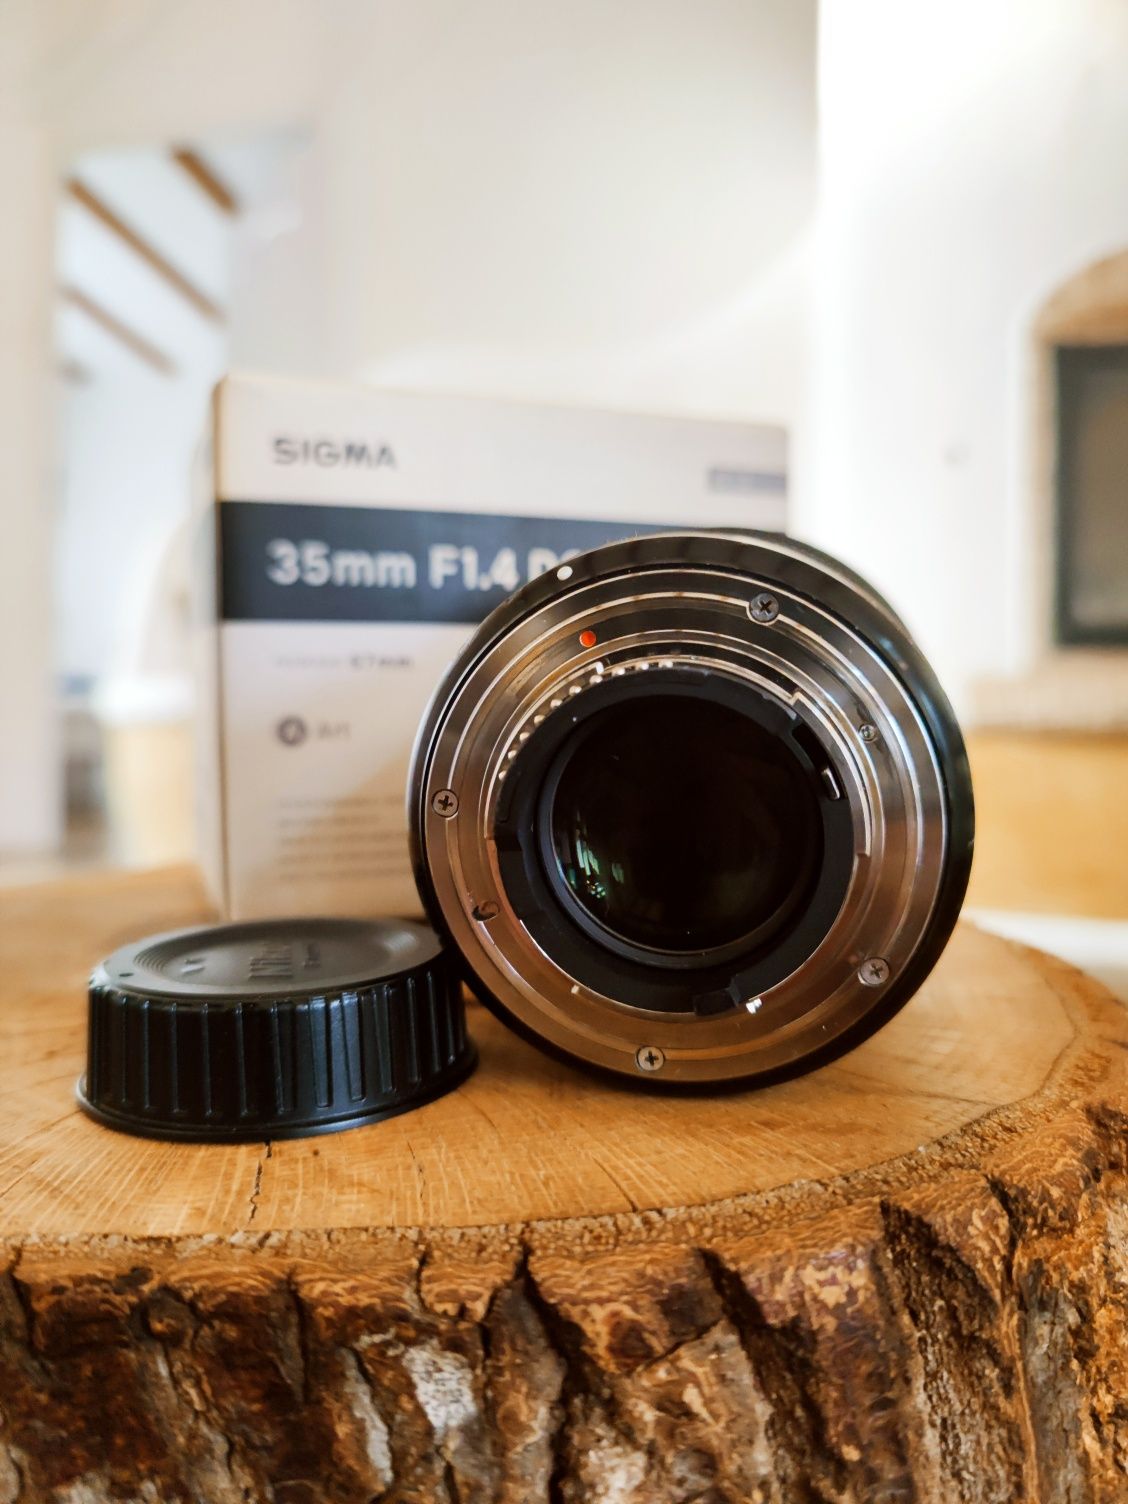 Sigma 35mm Obiectiv Foto DSLR F1.4 DG HSM Montura Nikon FX